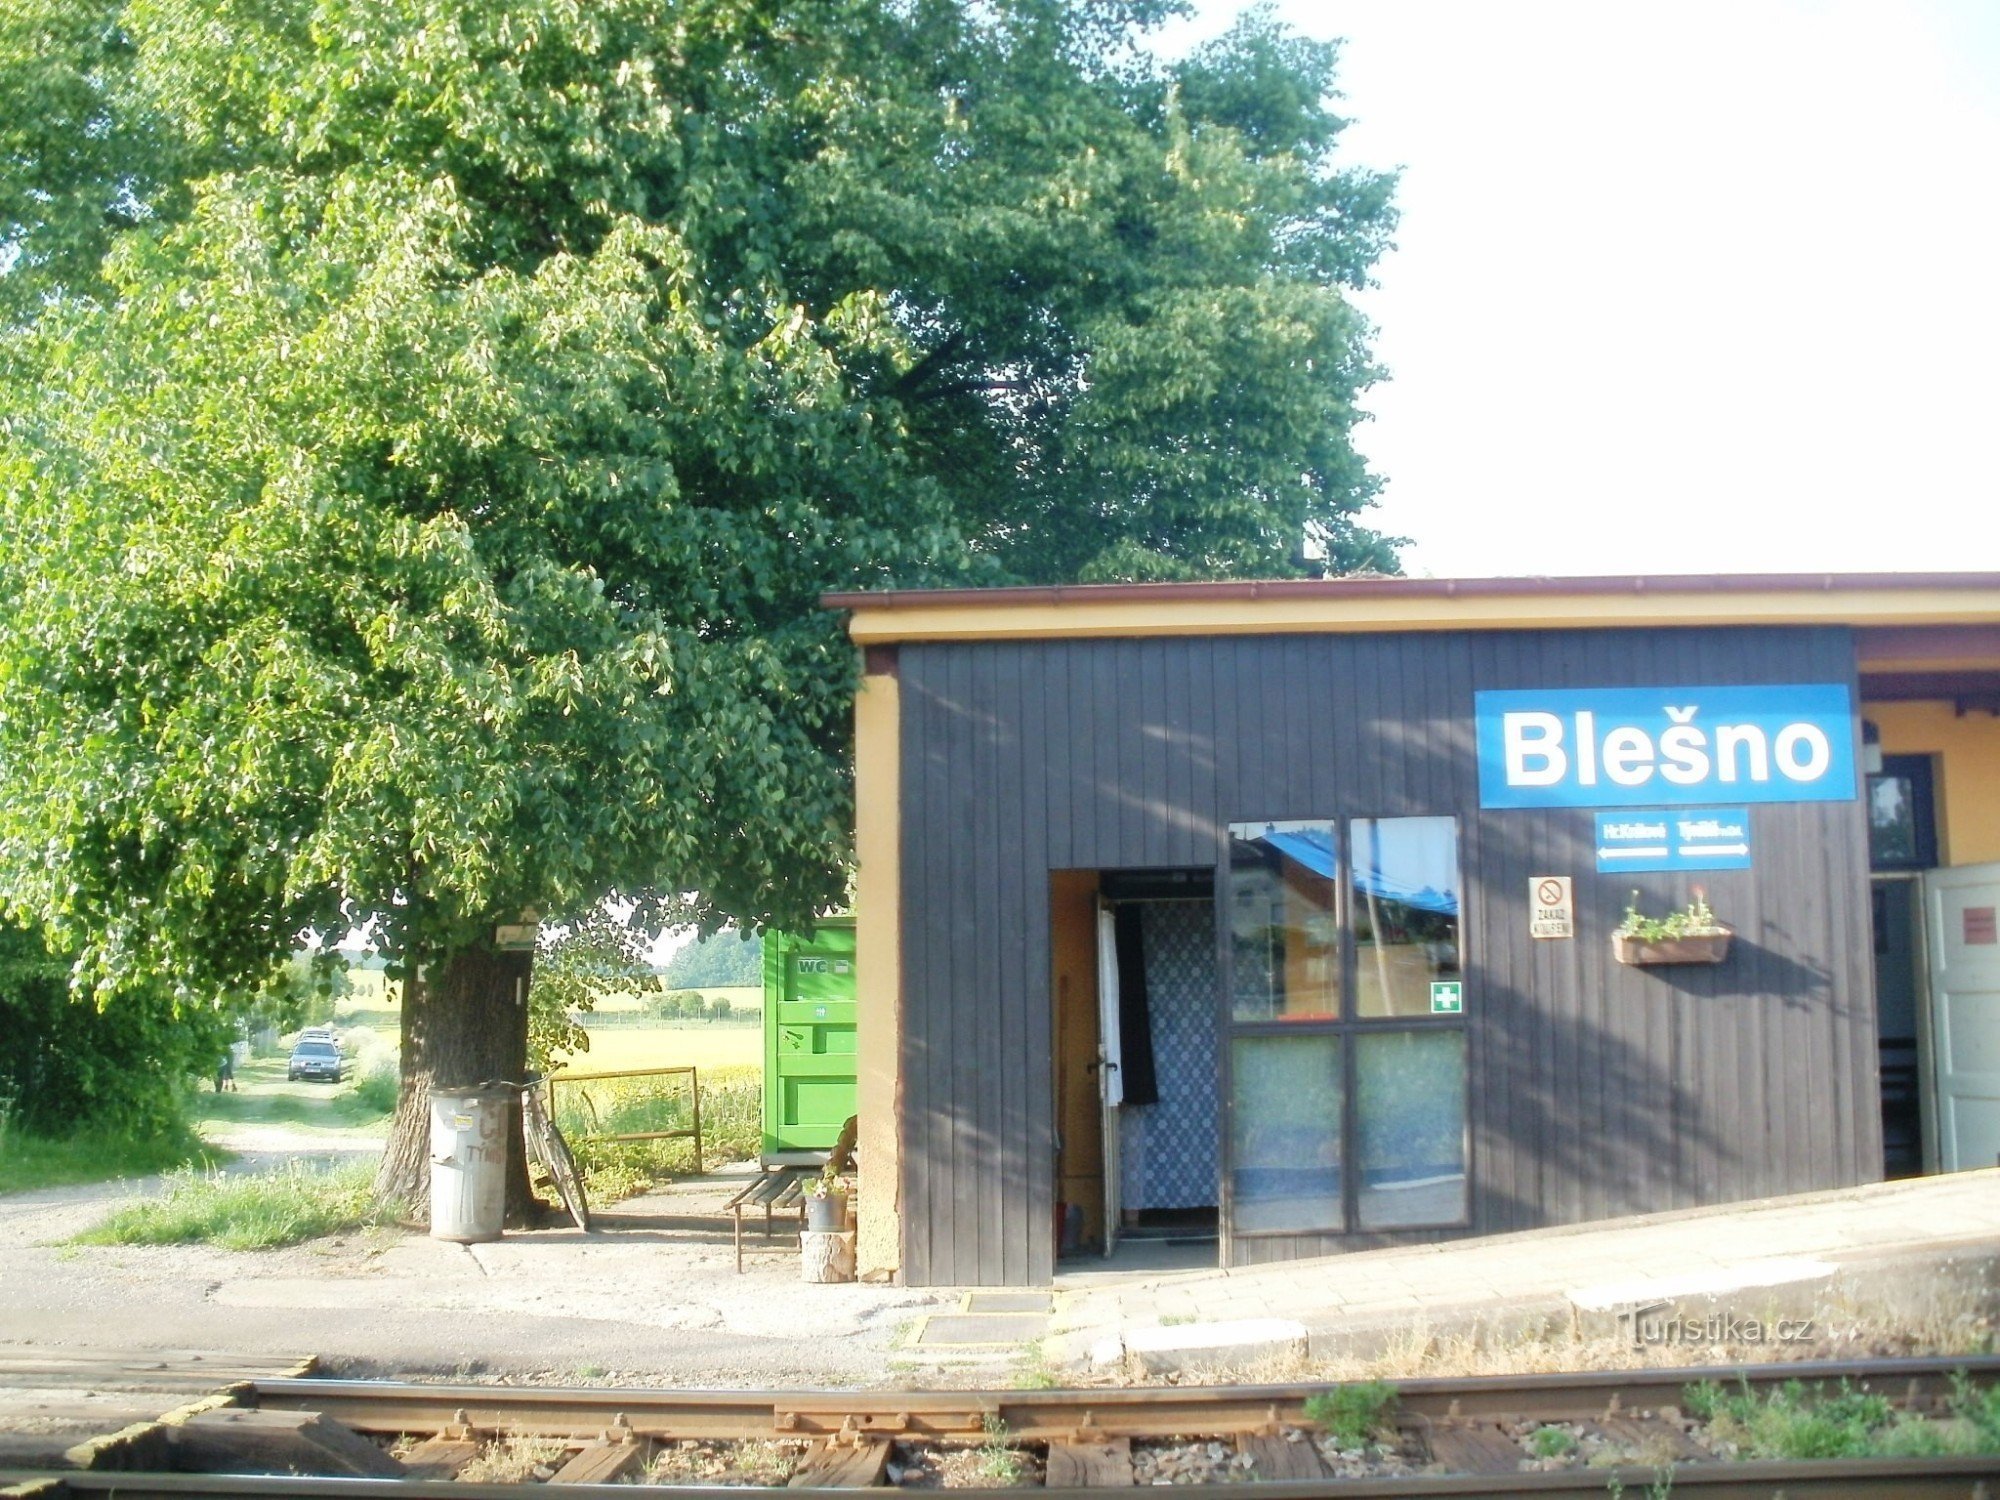 Touristenkreuzung Blešno - Eisenbahn